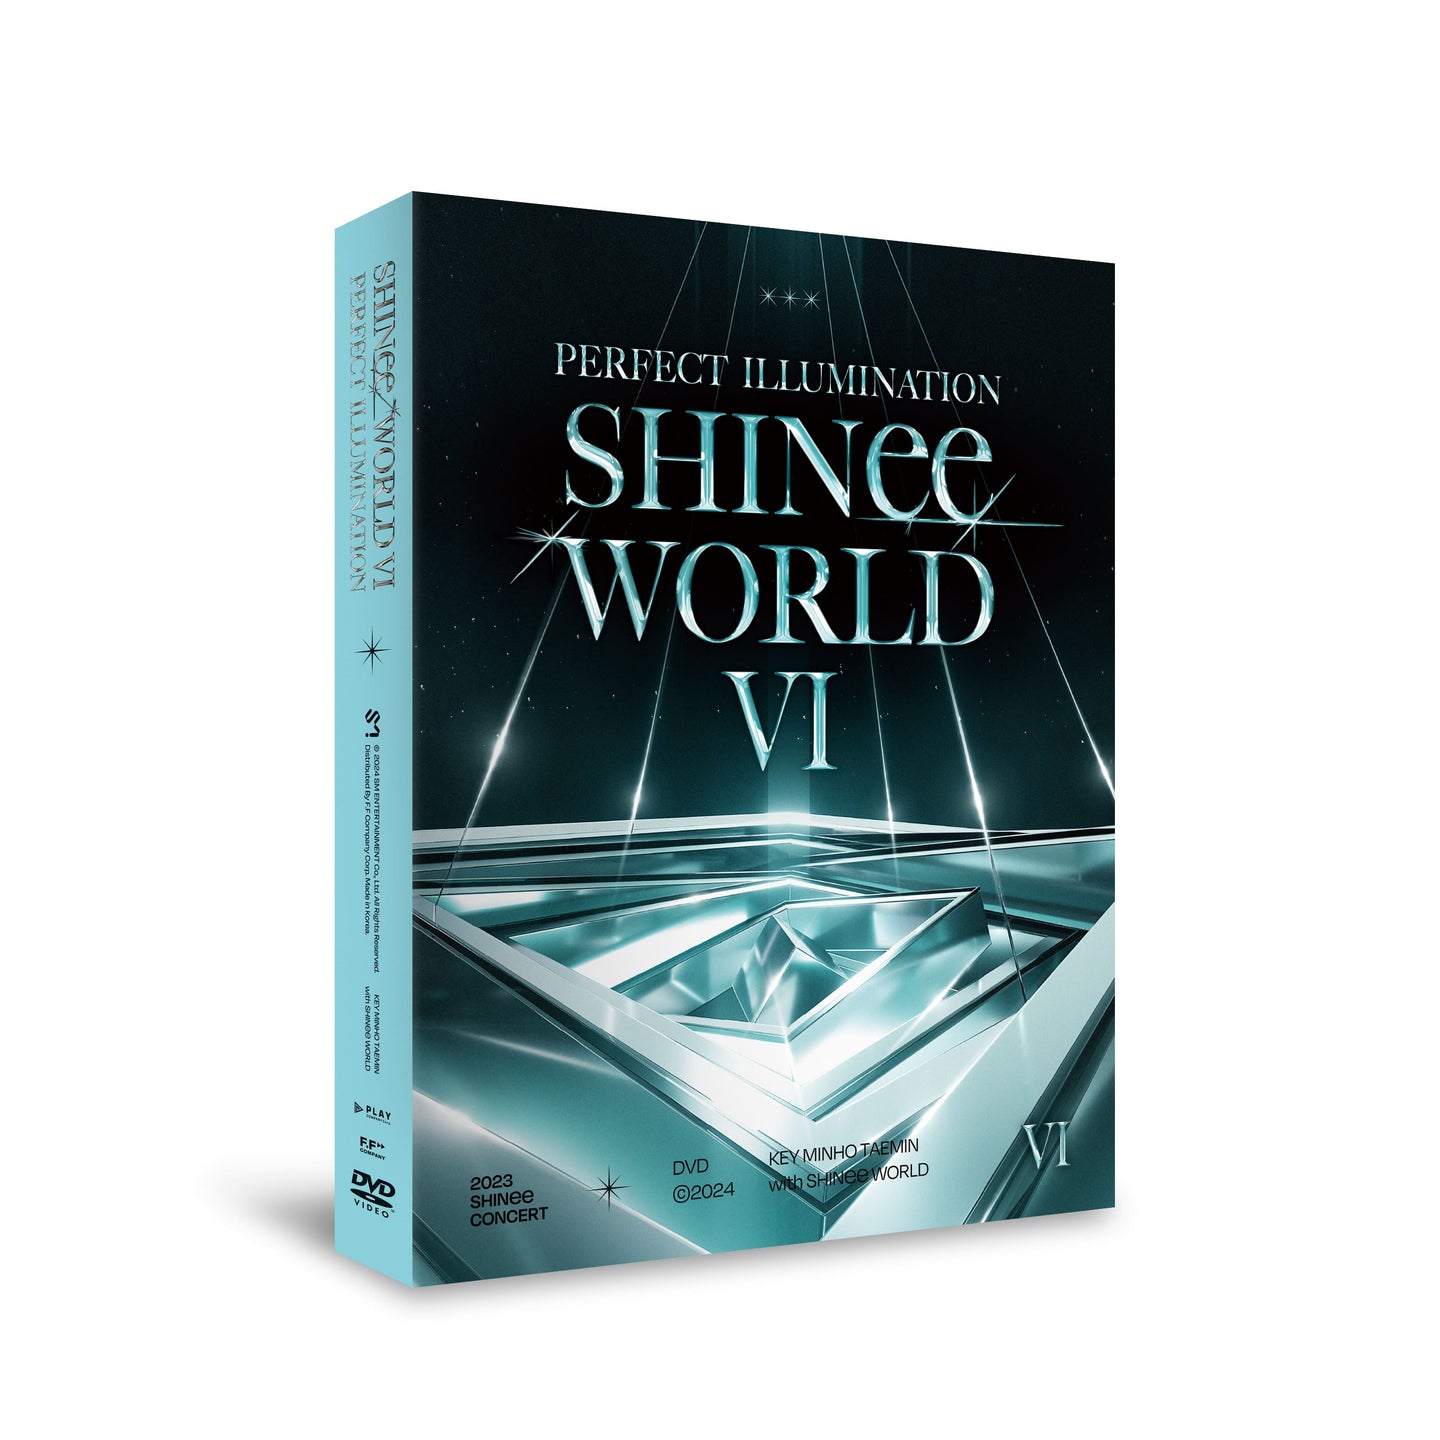 SHINee – SHINee WORLD VI [PERFECT ILLUMINATION] in SEOUL DVD